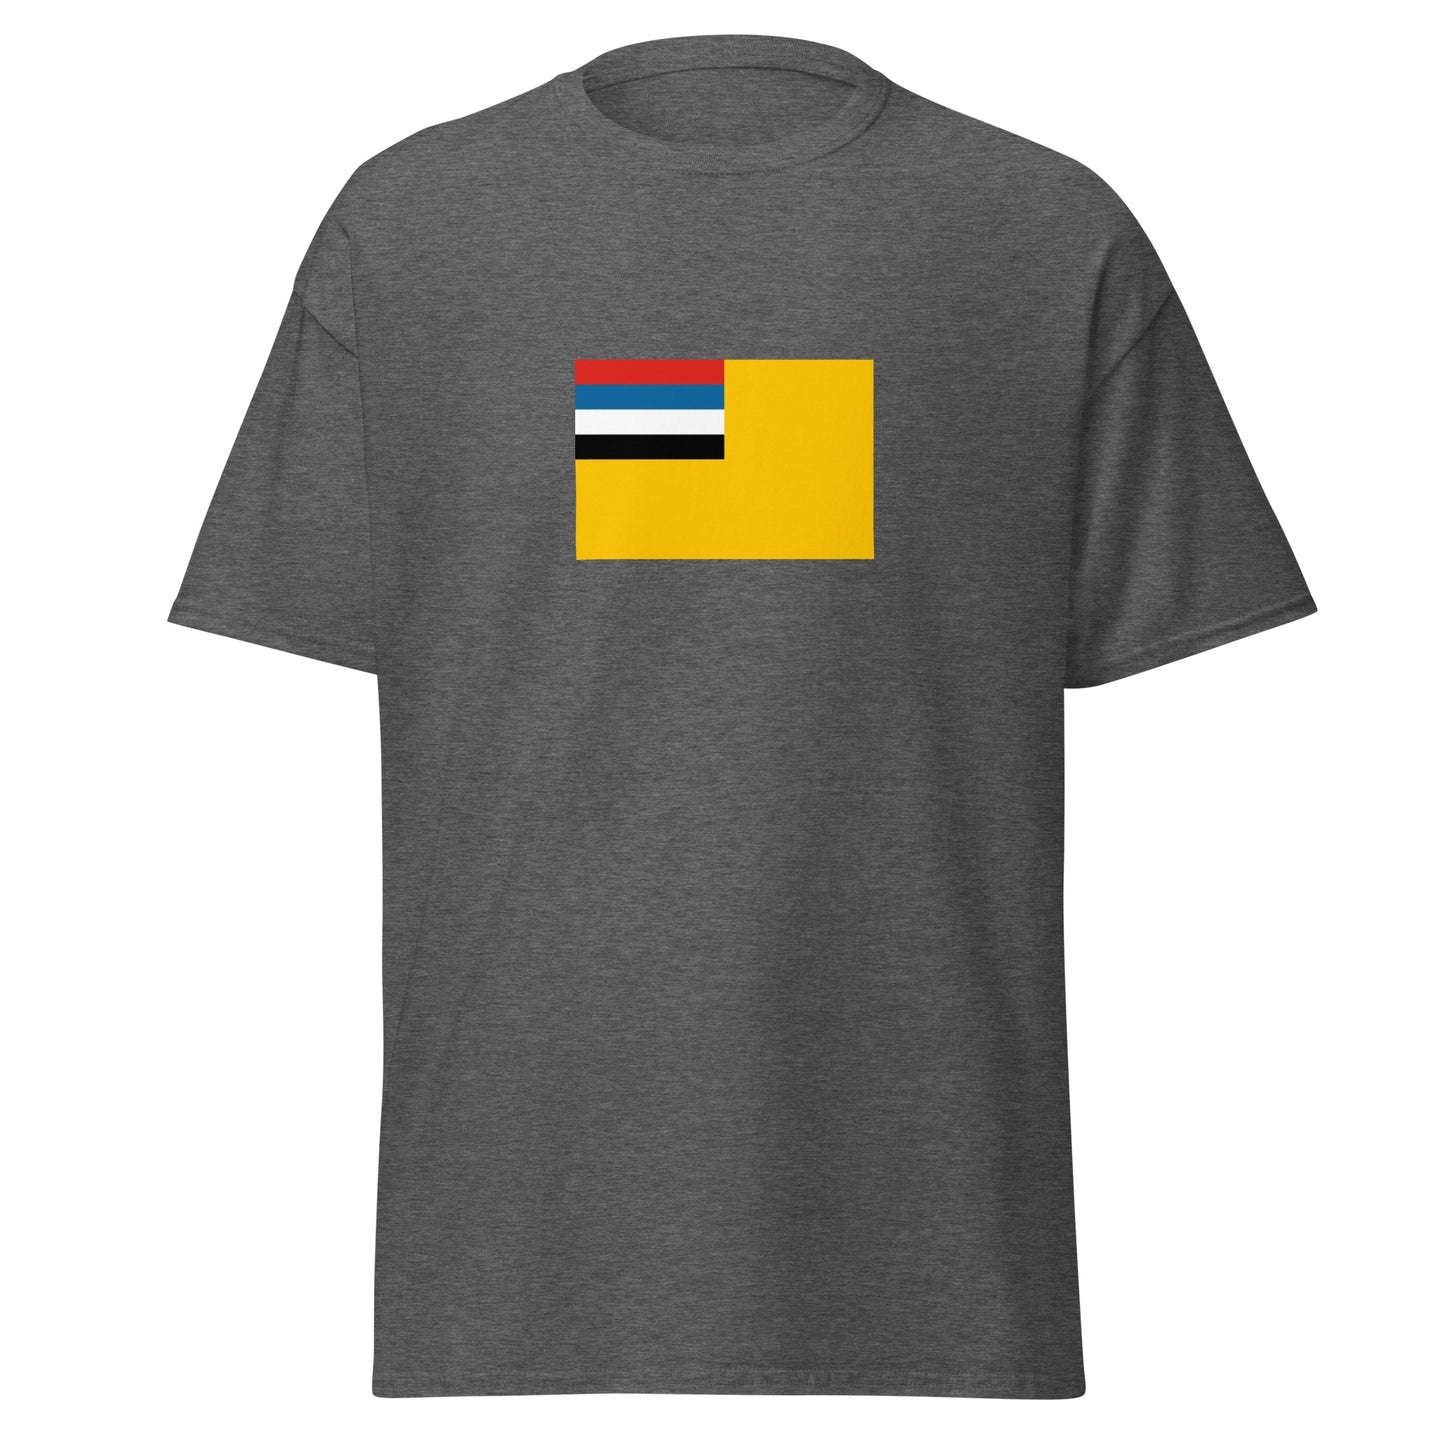 Manchu people | Ethnic China Flag Interactive T-shirt